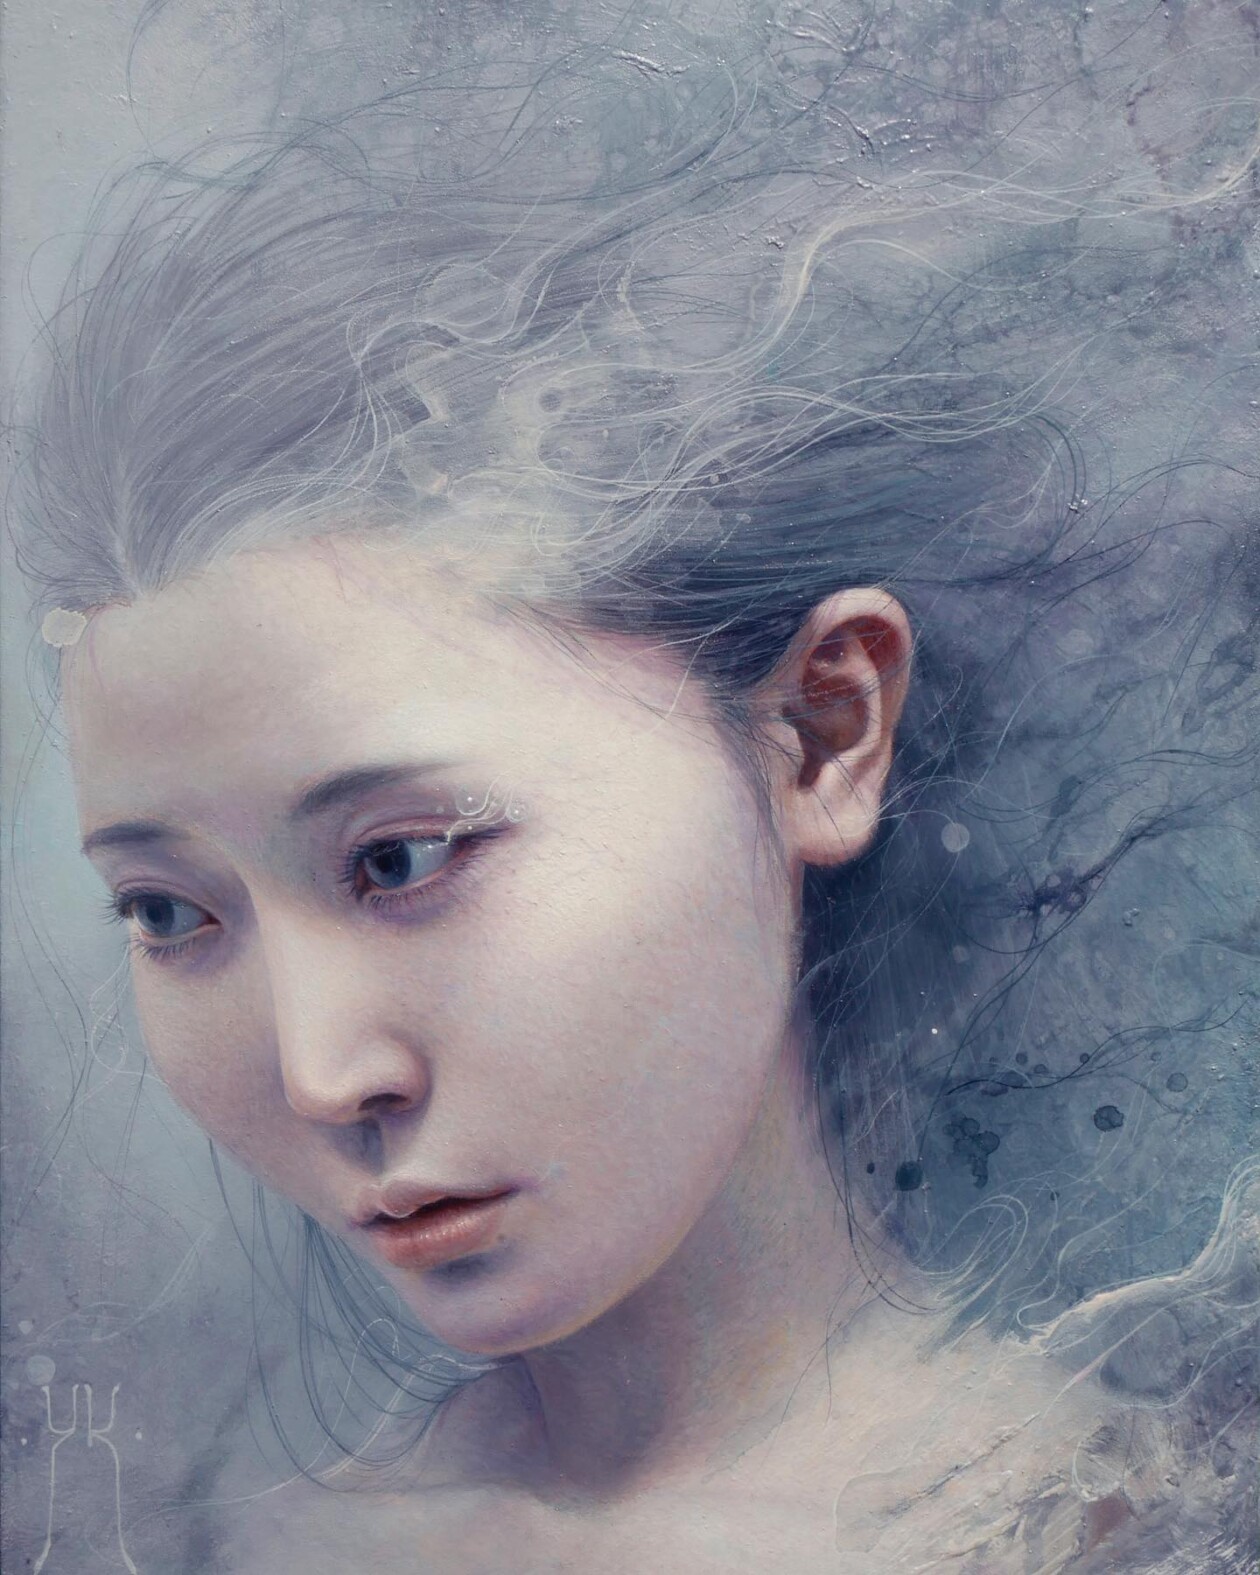 Capturing The Unseen, The Sublime Artistry Of Yosuke Kawashima (12)